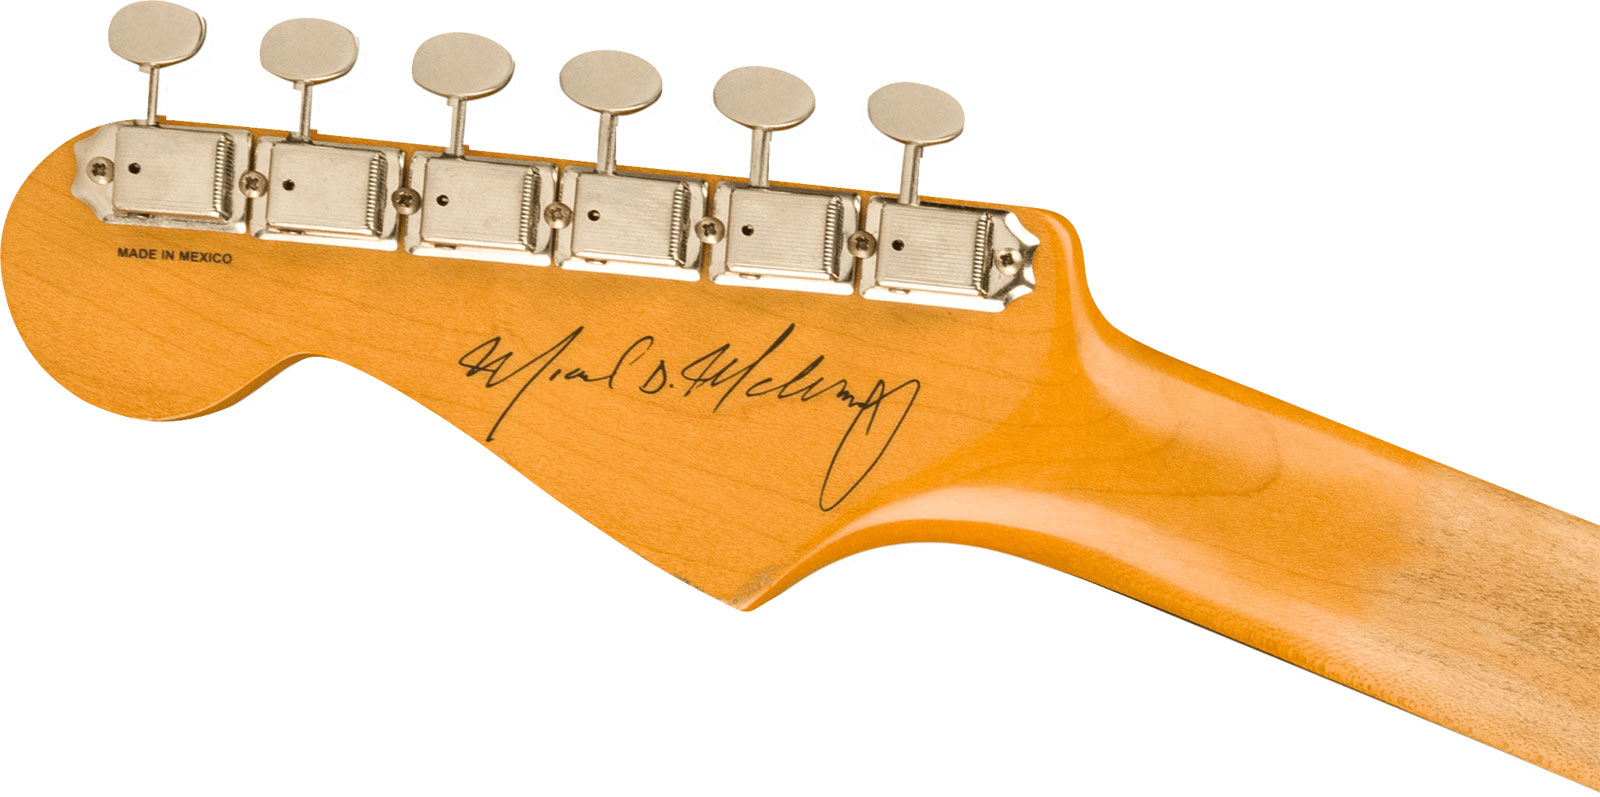 Fender Mike Mccready Strat Mex Signature 3s Trem Rw - Road Worn 3-color Sunburst - Guitarra eléctrica de autor - Variation 3